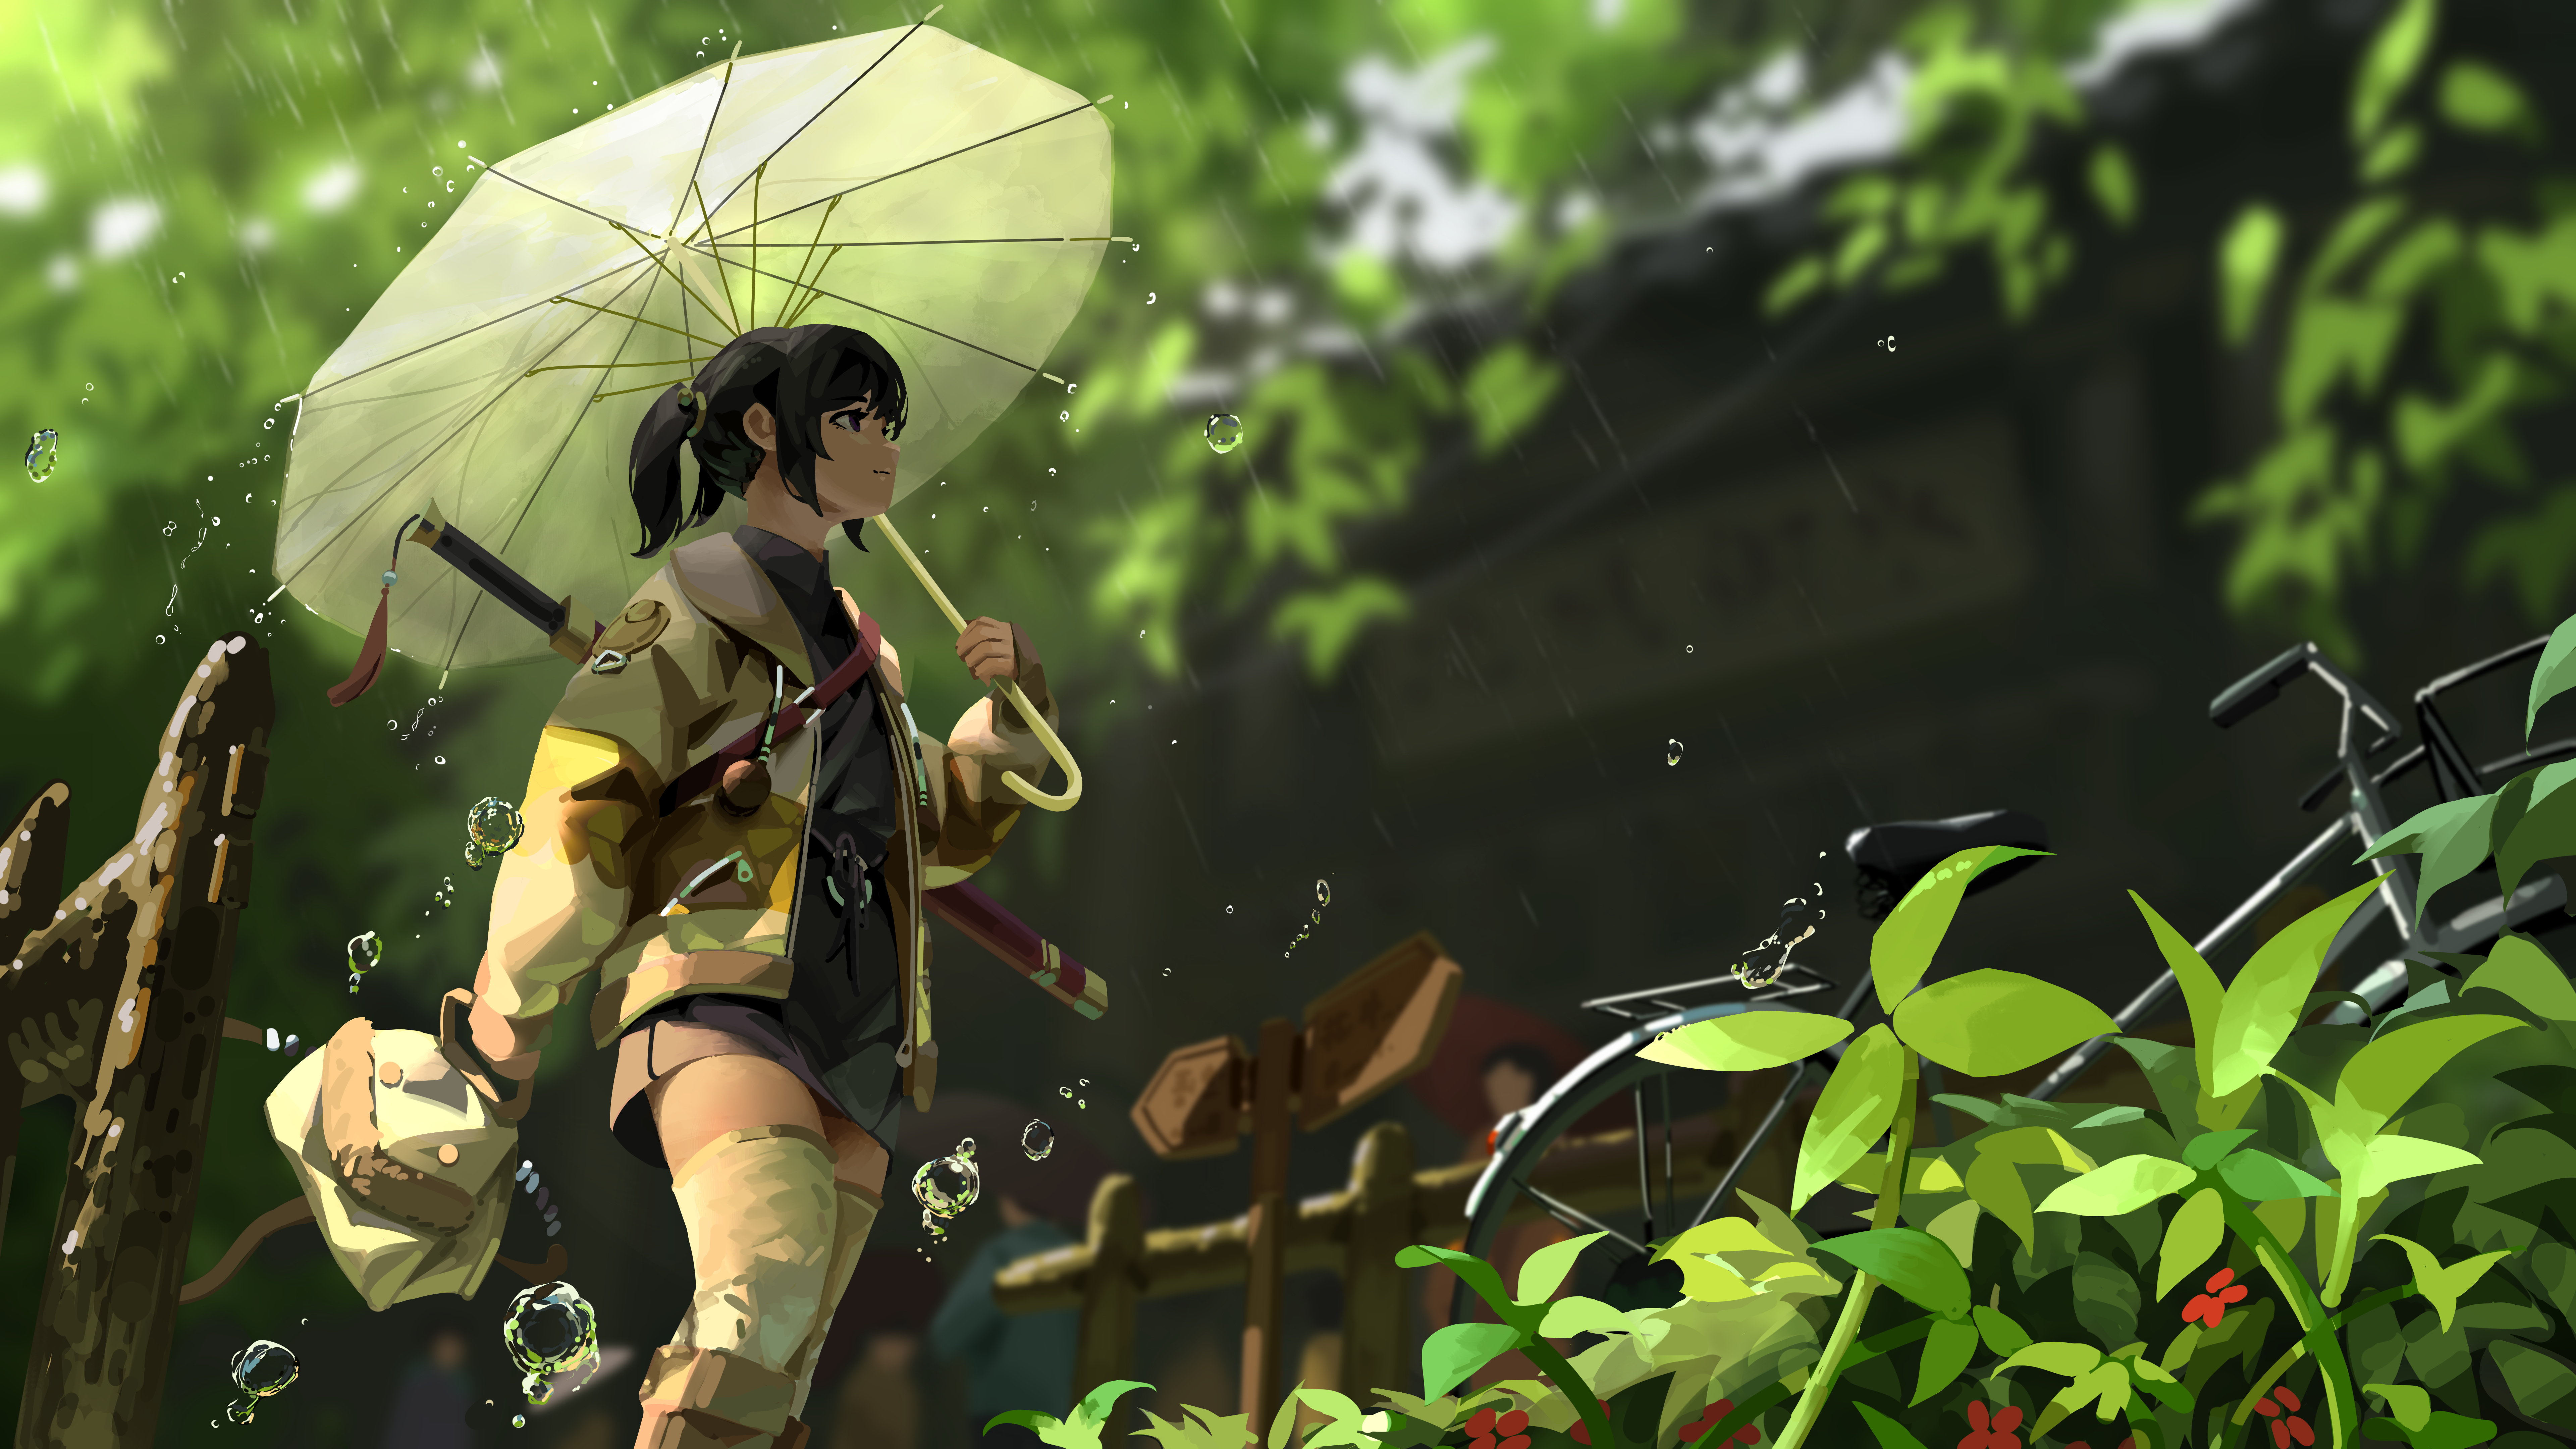 Digital Art Artwork Illustration Women Fantasy Art Fantasy Girl Umbrella Rain Plants Nature Kan Liu 7680x4320